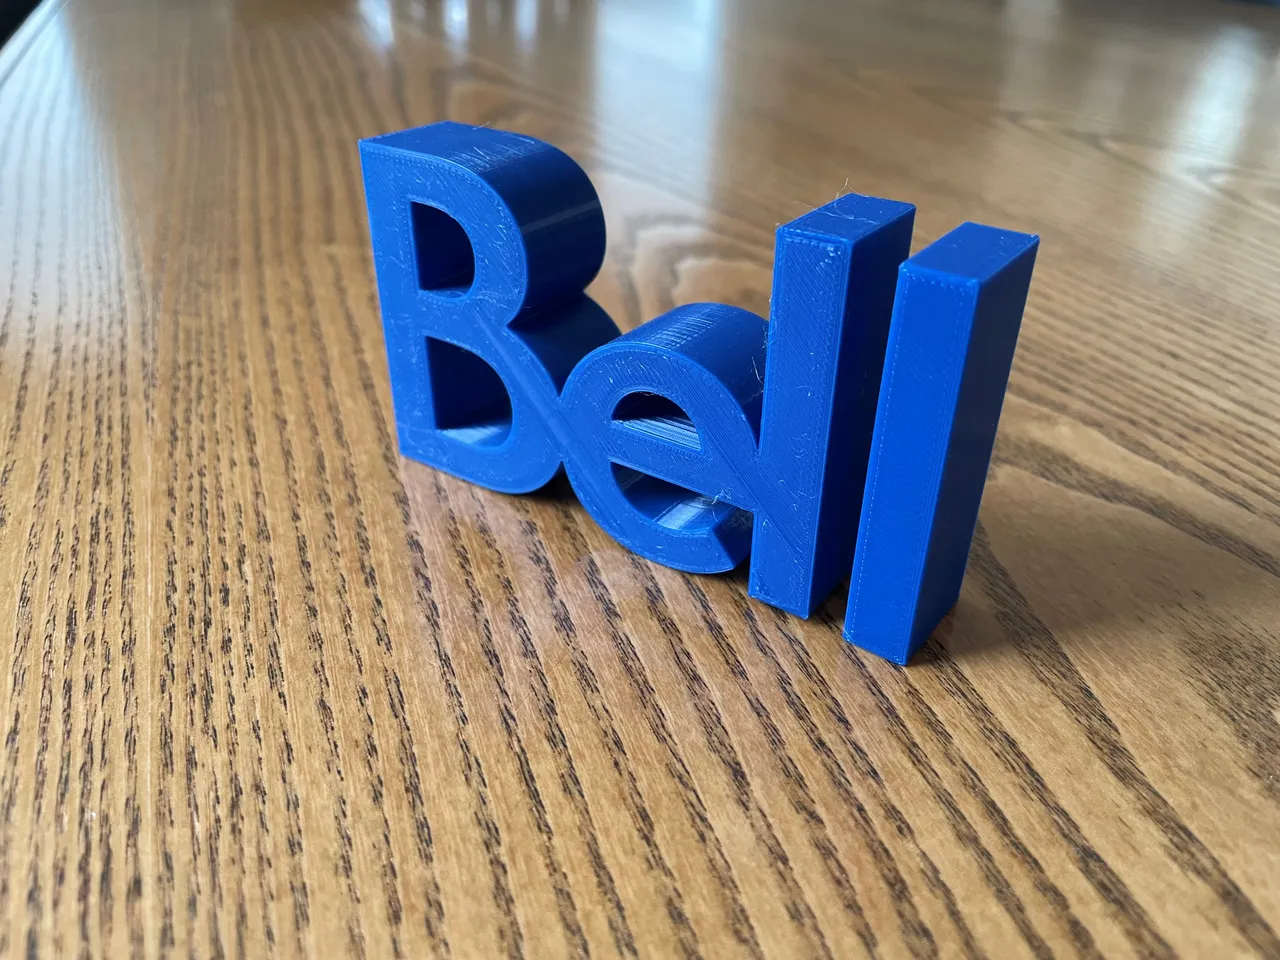 Bell Canada 